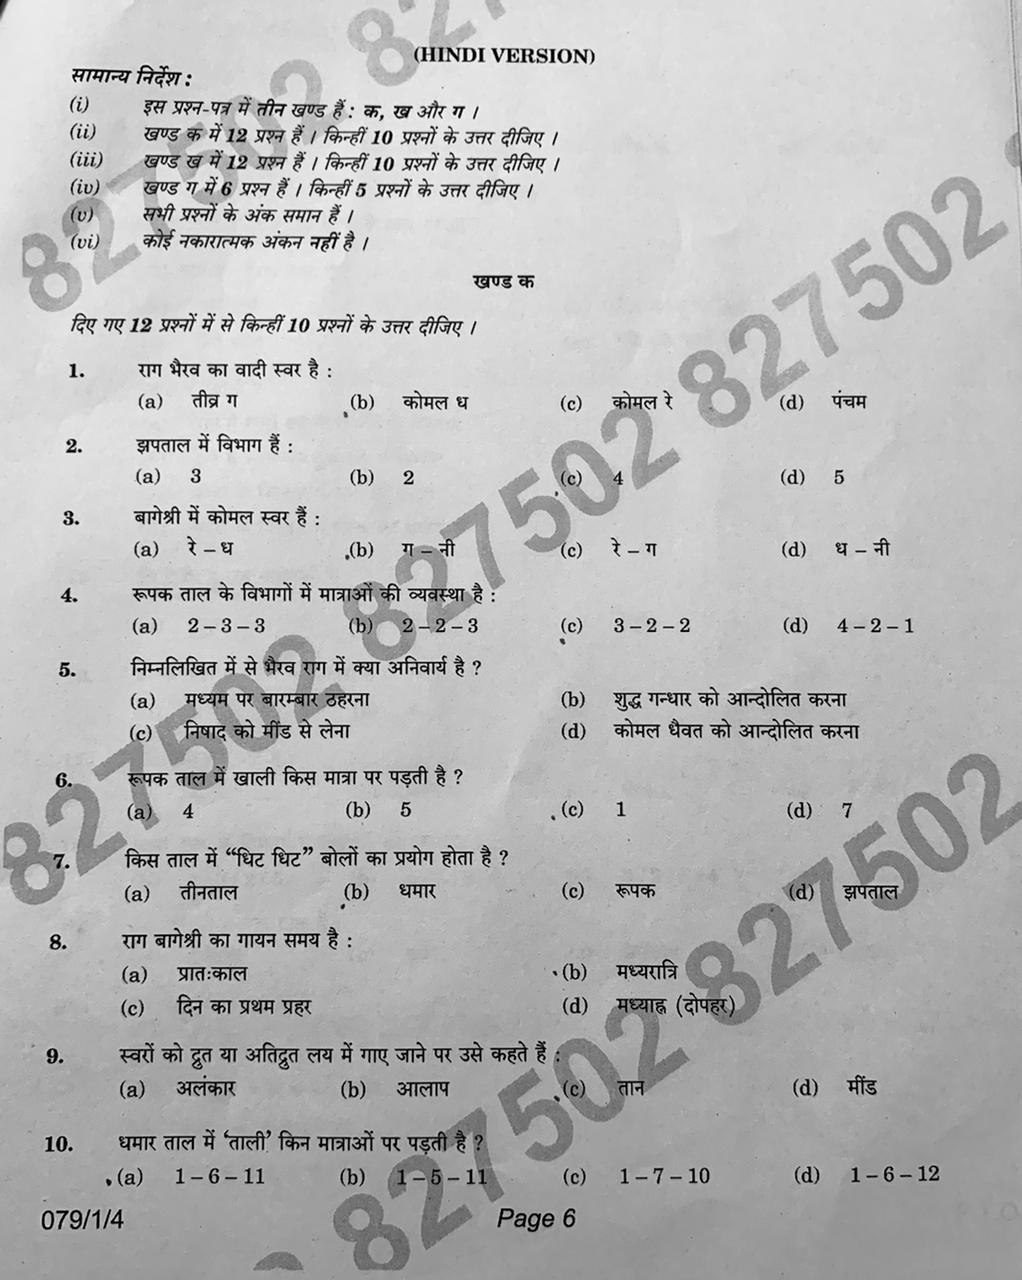 Answer Key of Hindustani Music Vocal Exam